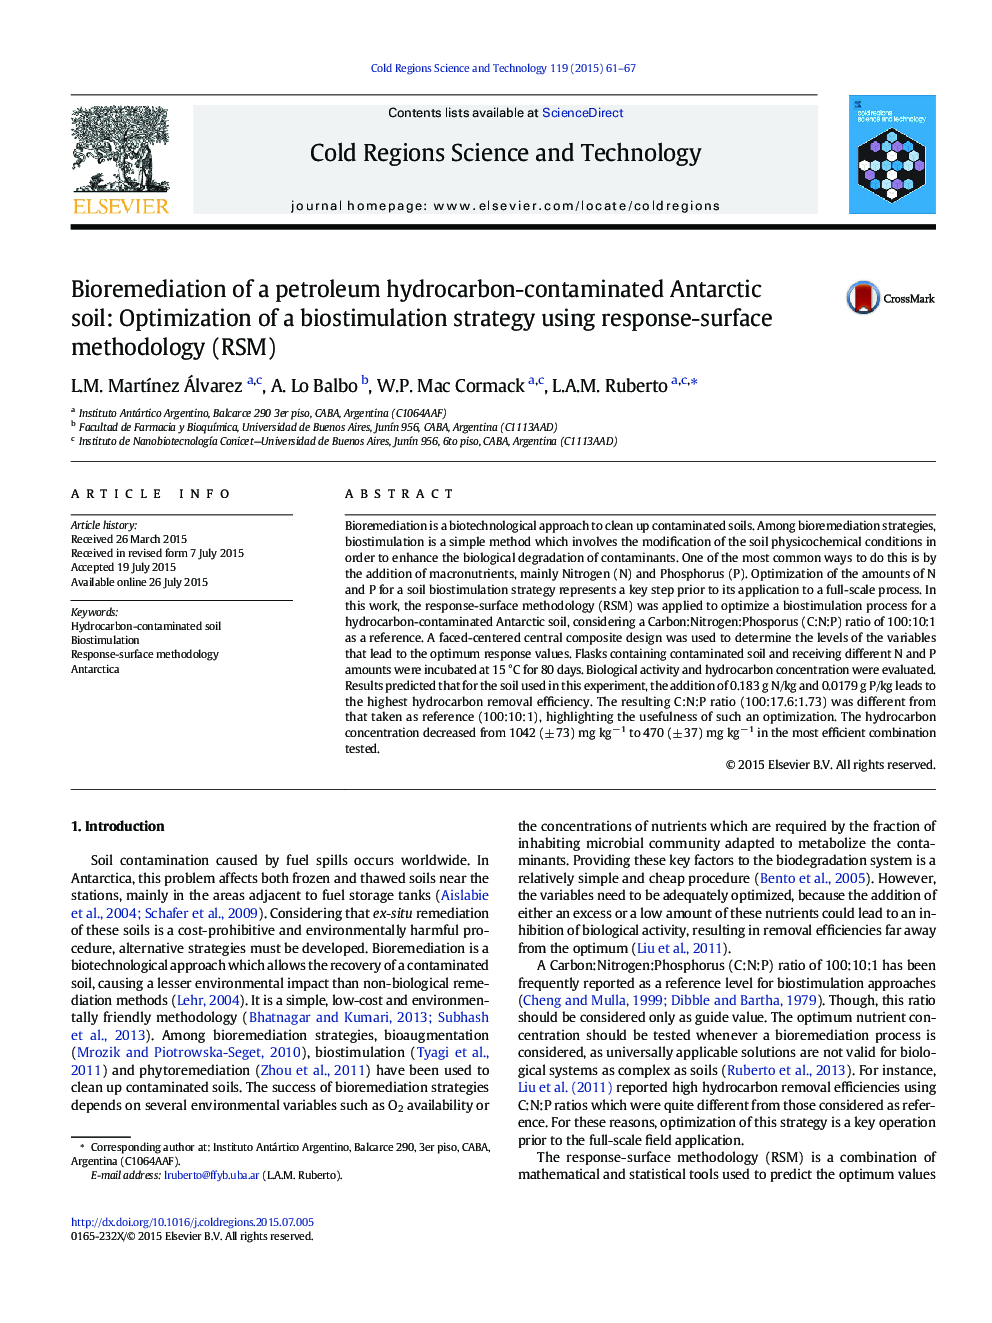 Bioremediation of a petroleum hydrocarbon-contaminated Antarctic soil: Optimization of a biostimulation strategy using response-surface methodology (RSM)